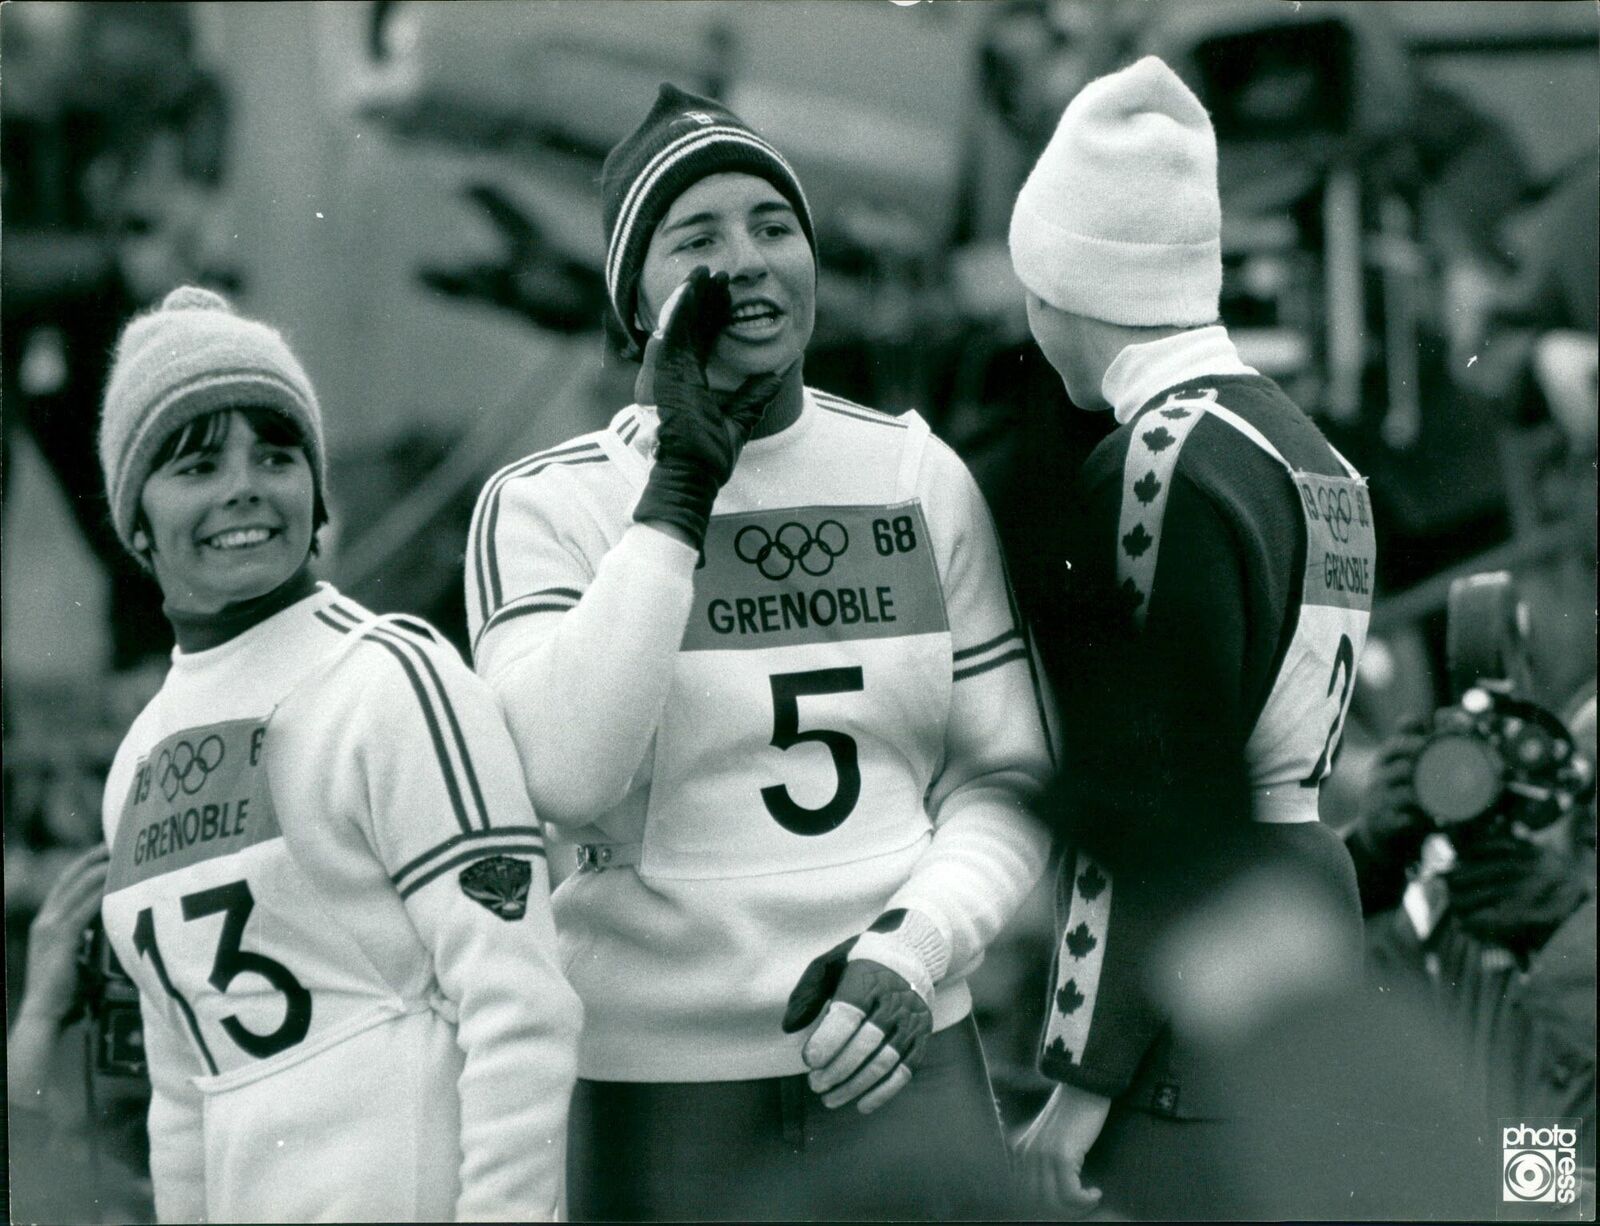 1968 Winter Olympics - Vintage Photograph 3772397